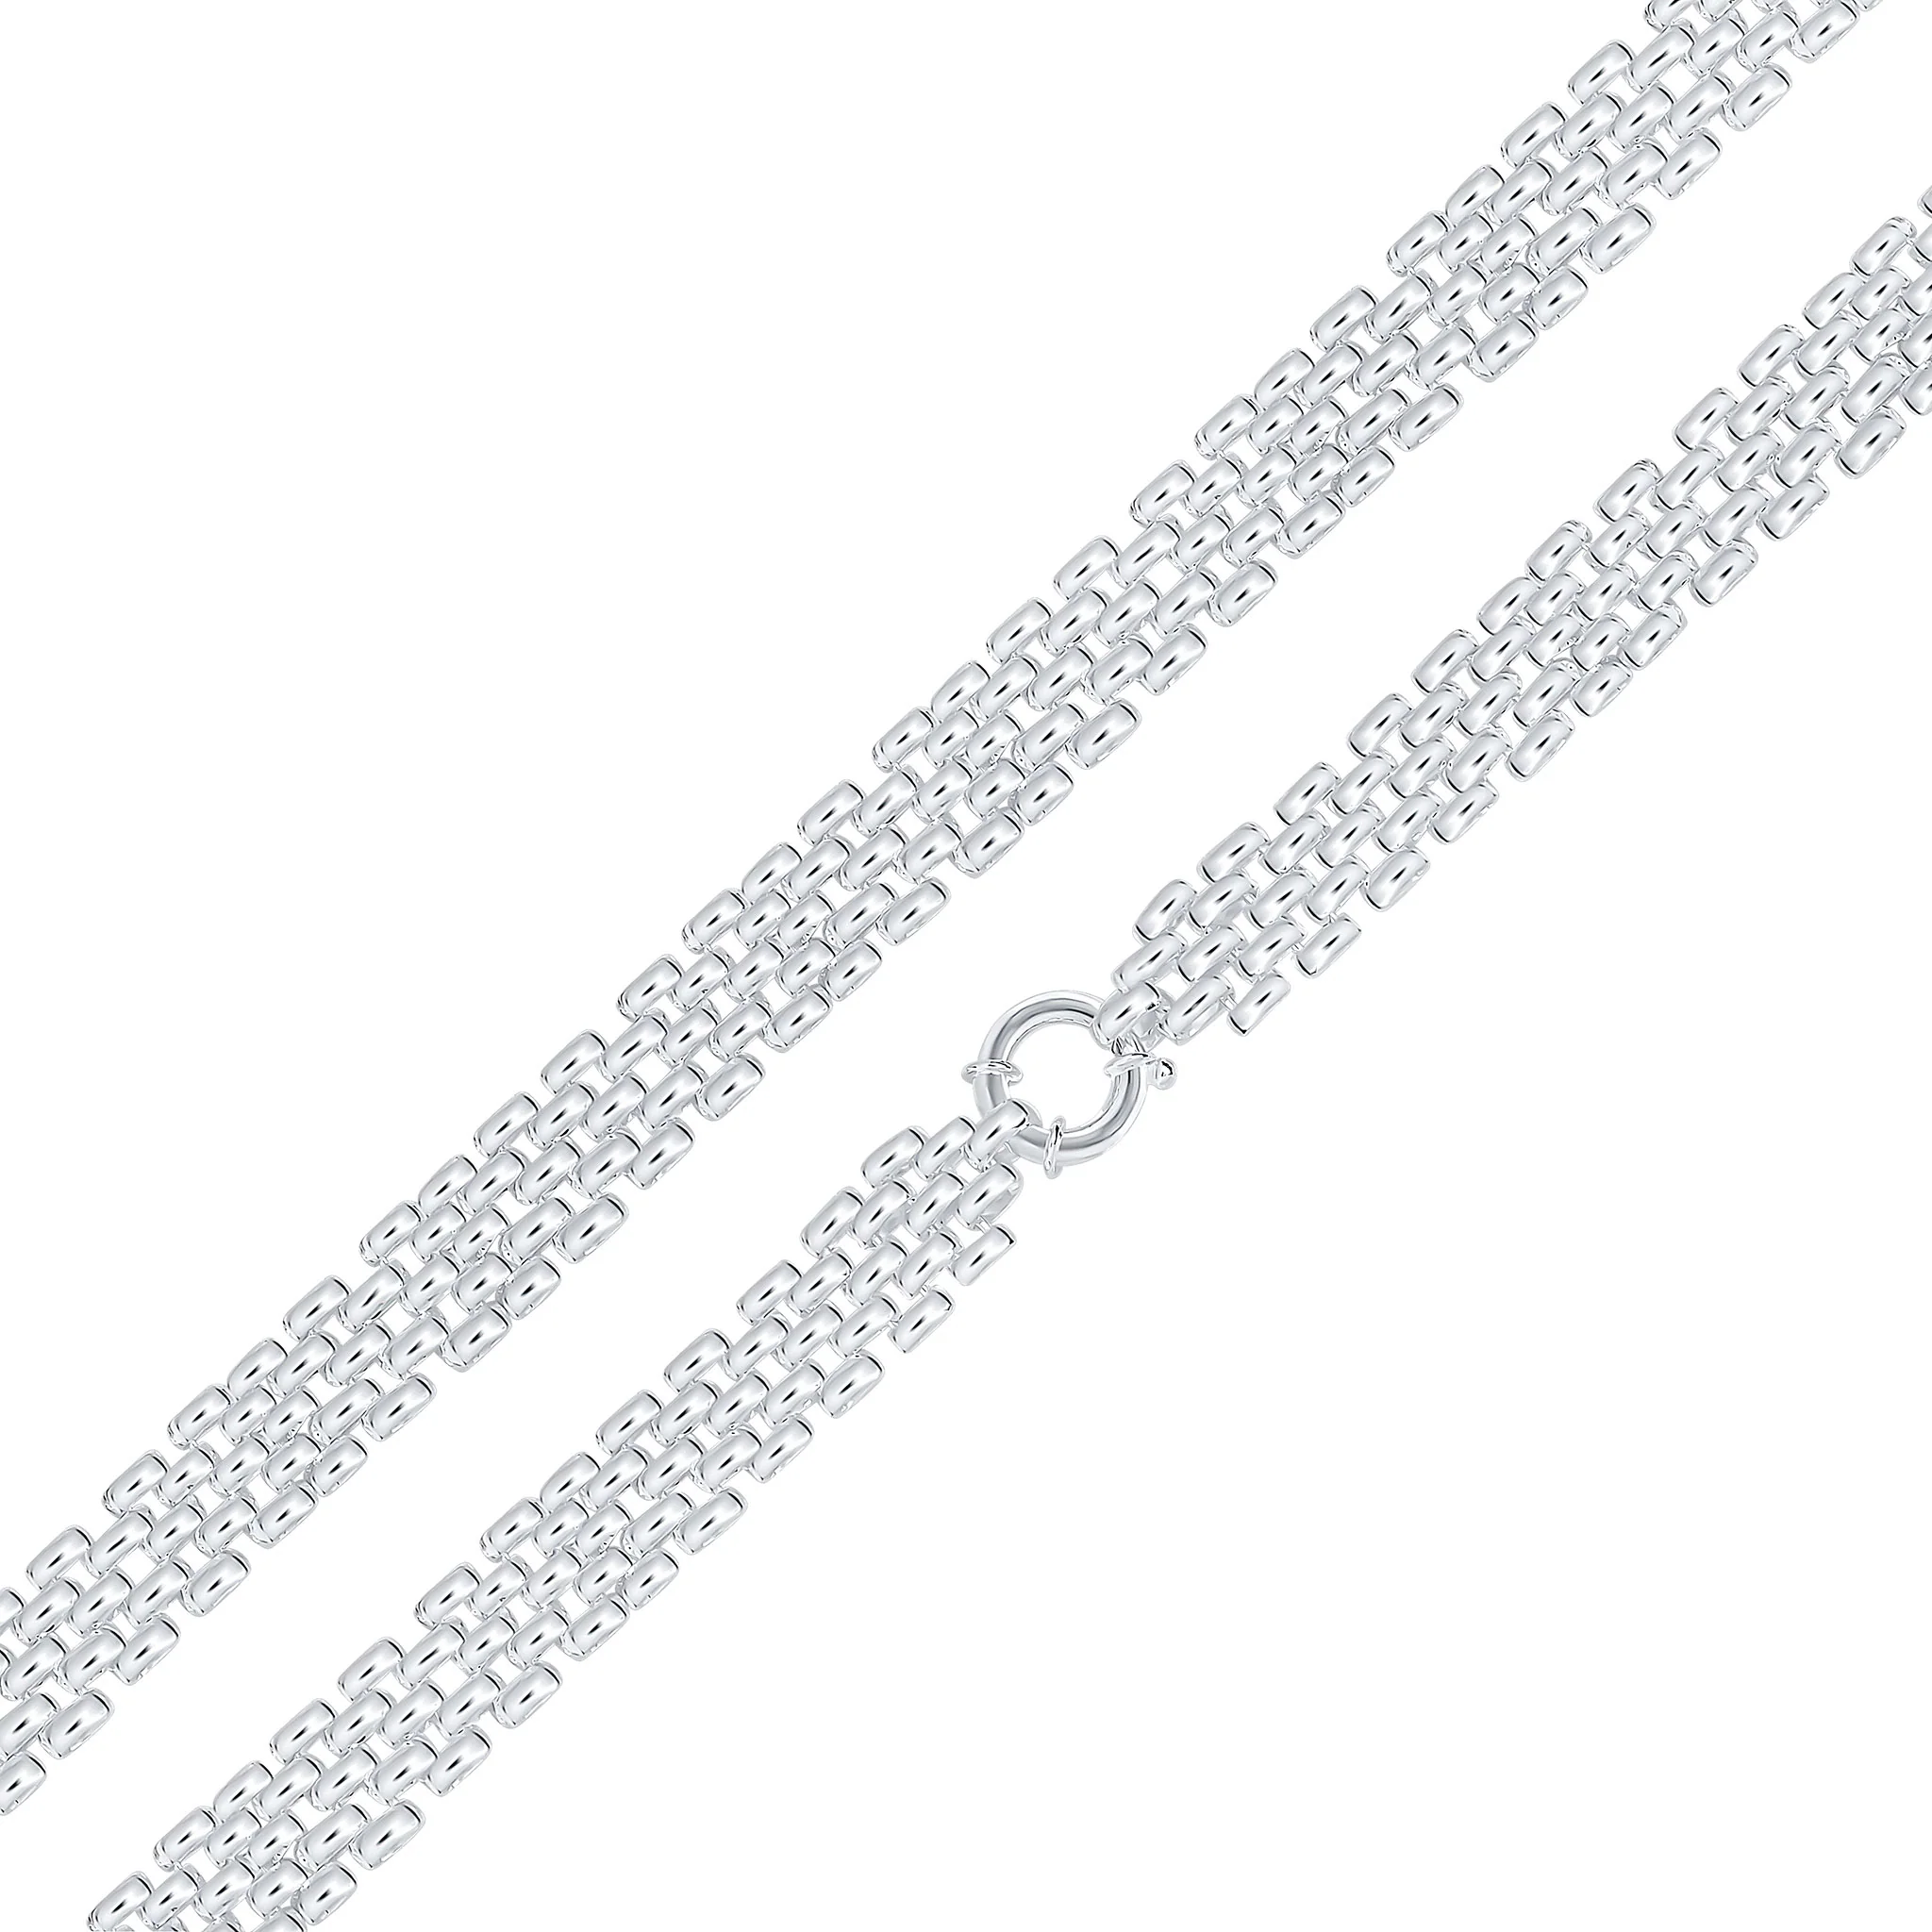 Silver Handmade 15mm Five Row Brick Chain or Bracelet - Robert Anthony Jewellers, Edinburgh